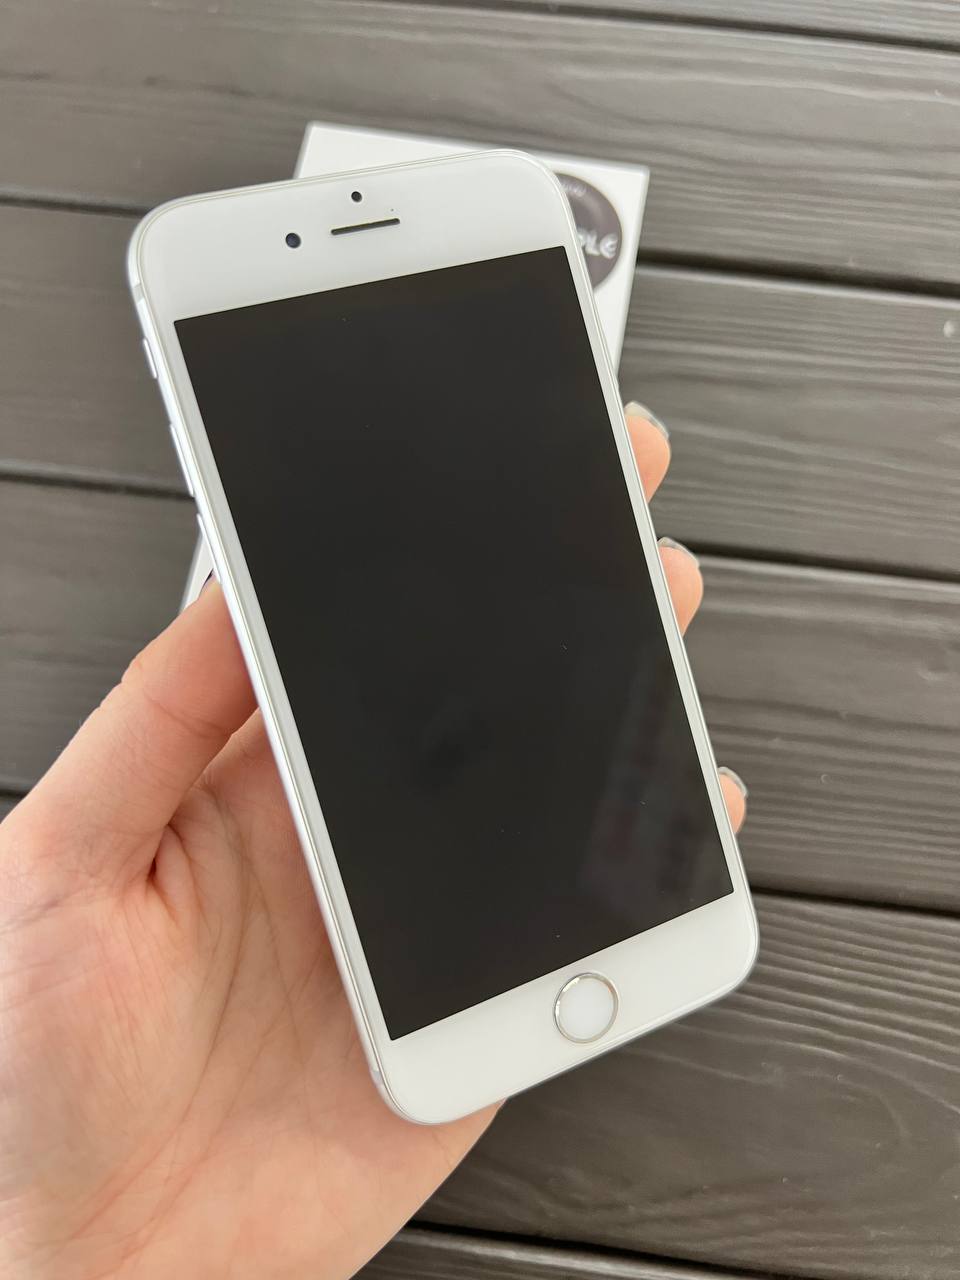 Apple iPhone 6 64gb Silver